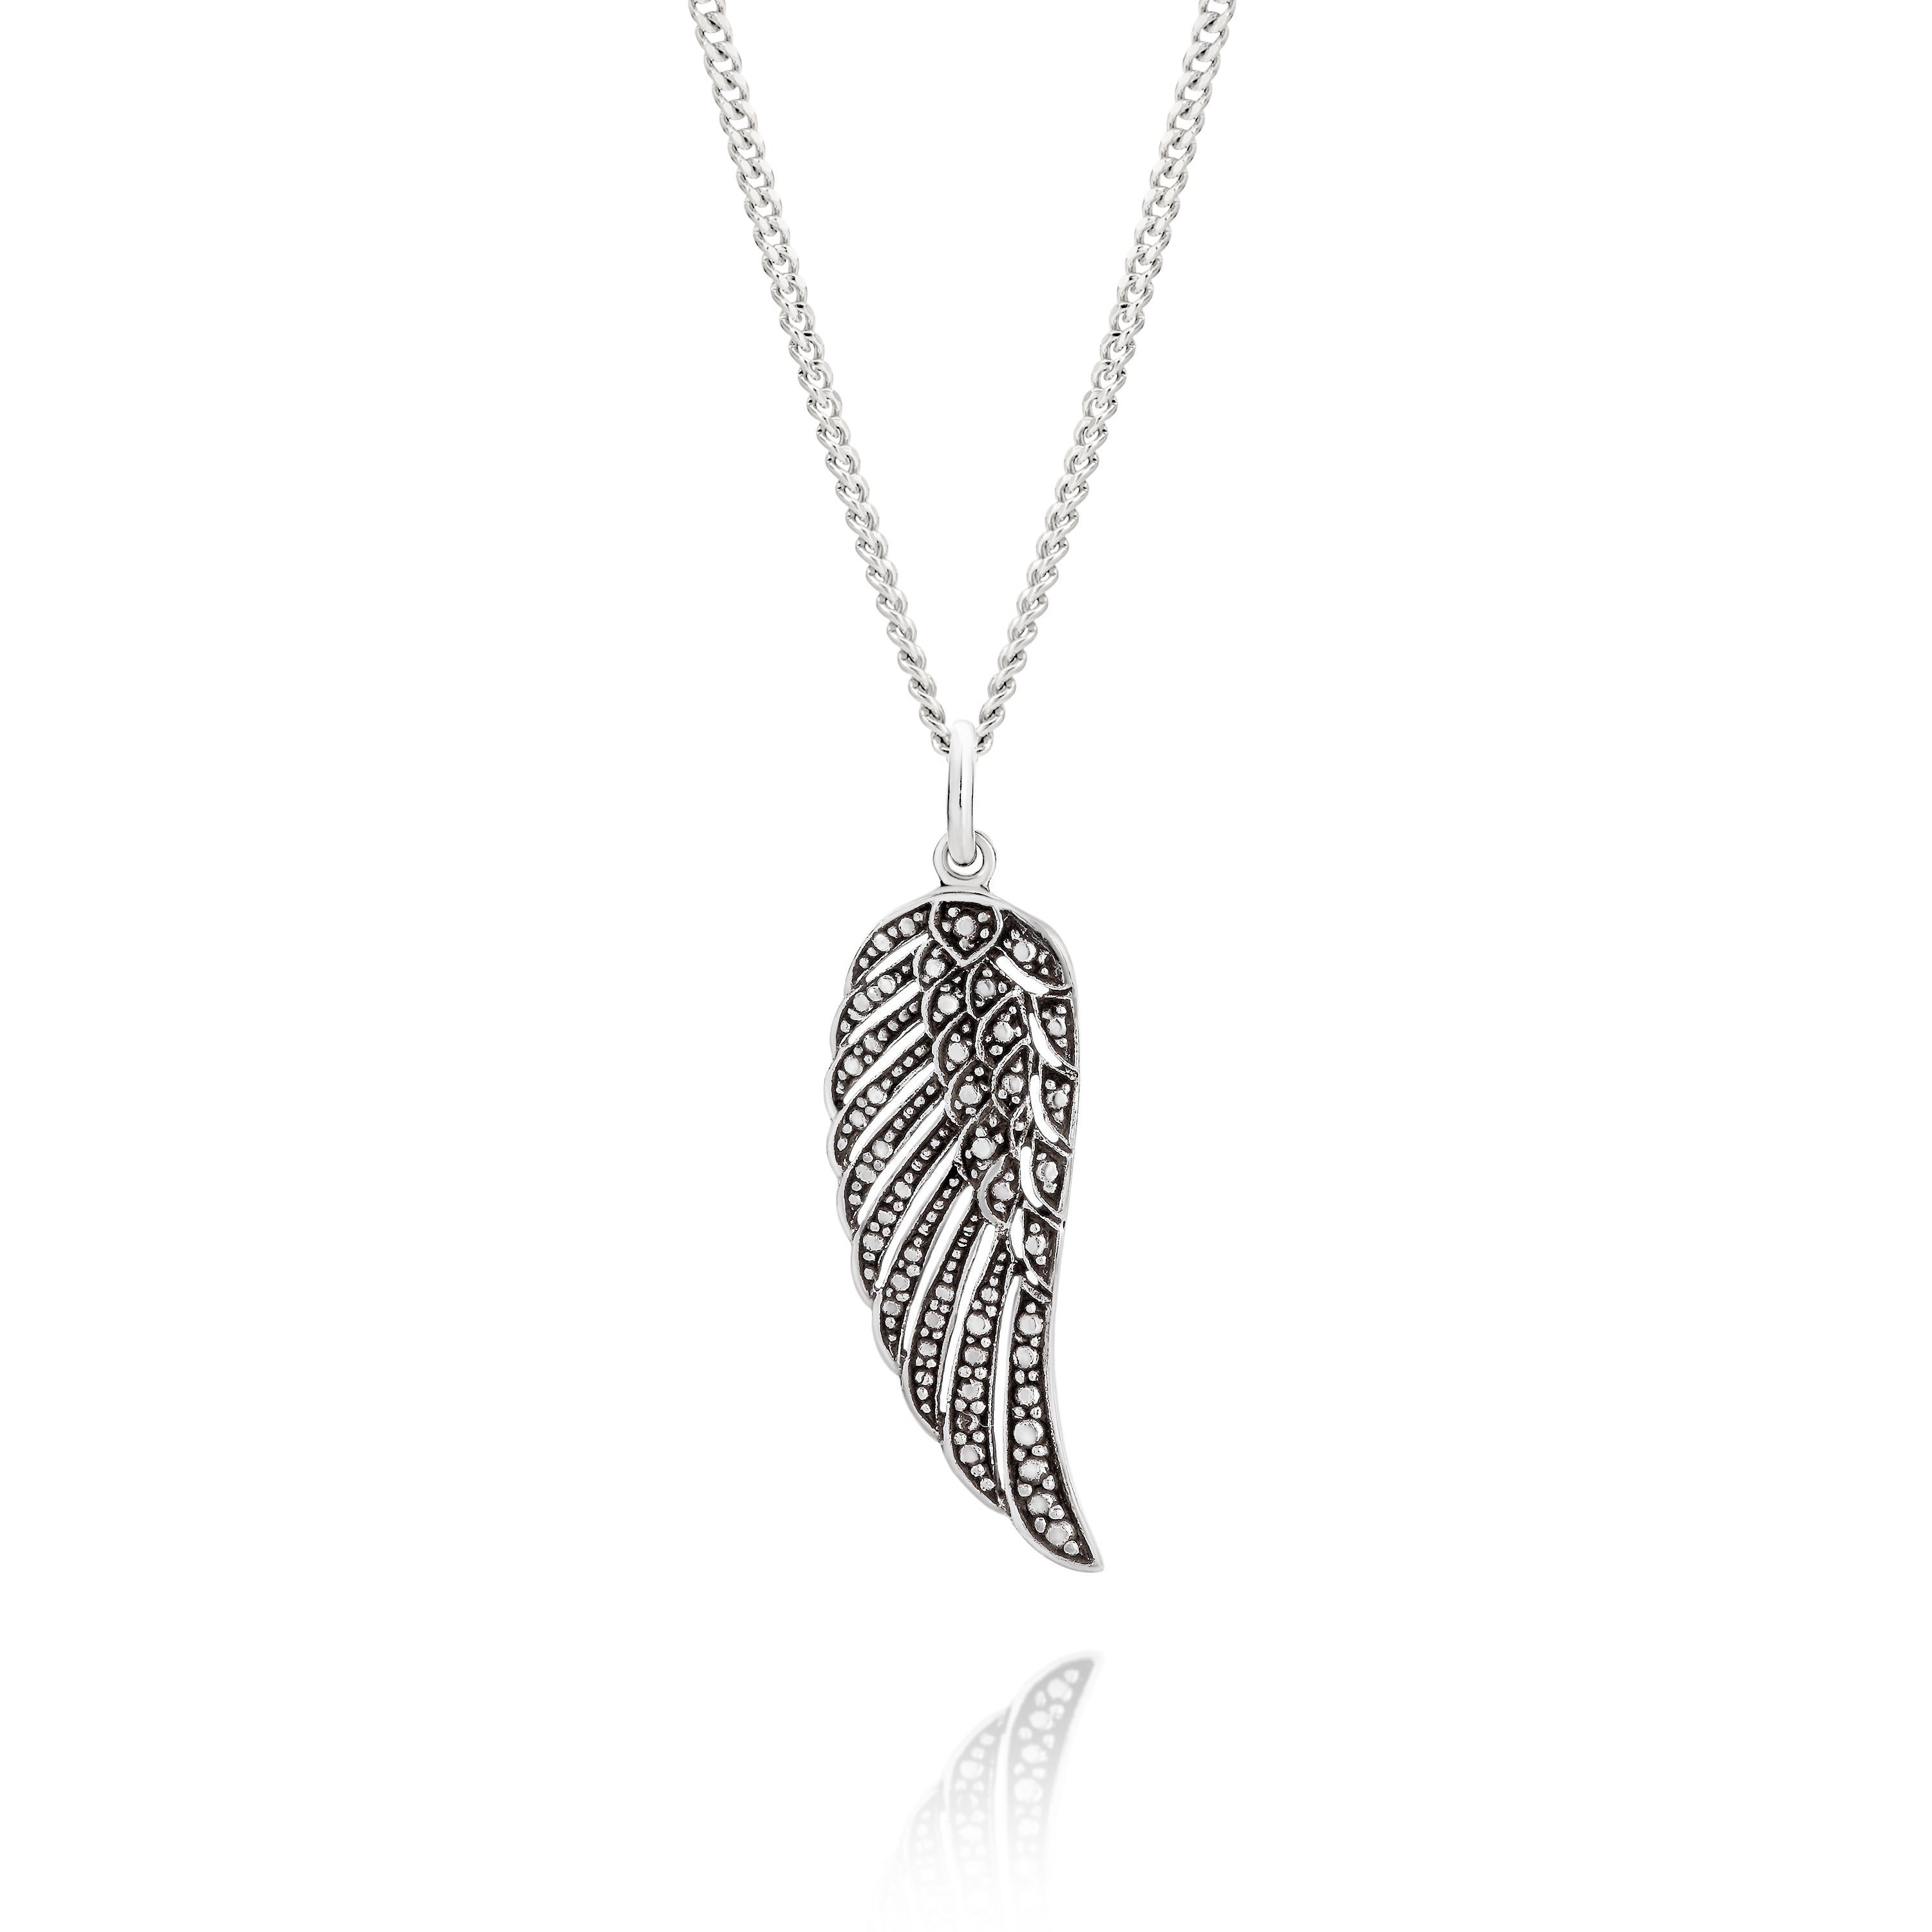 Silver oxidised wing pendant